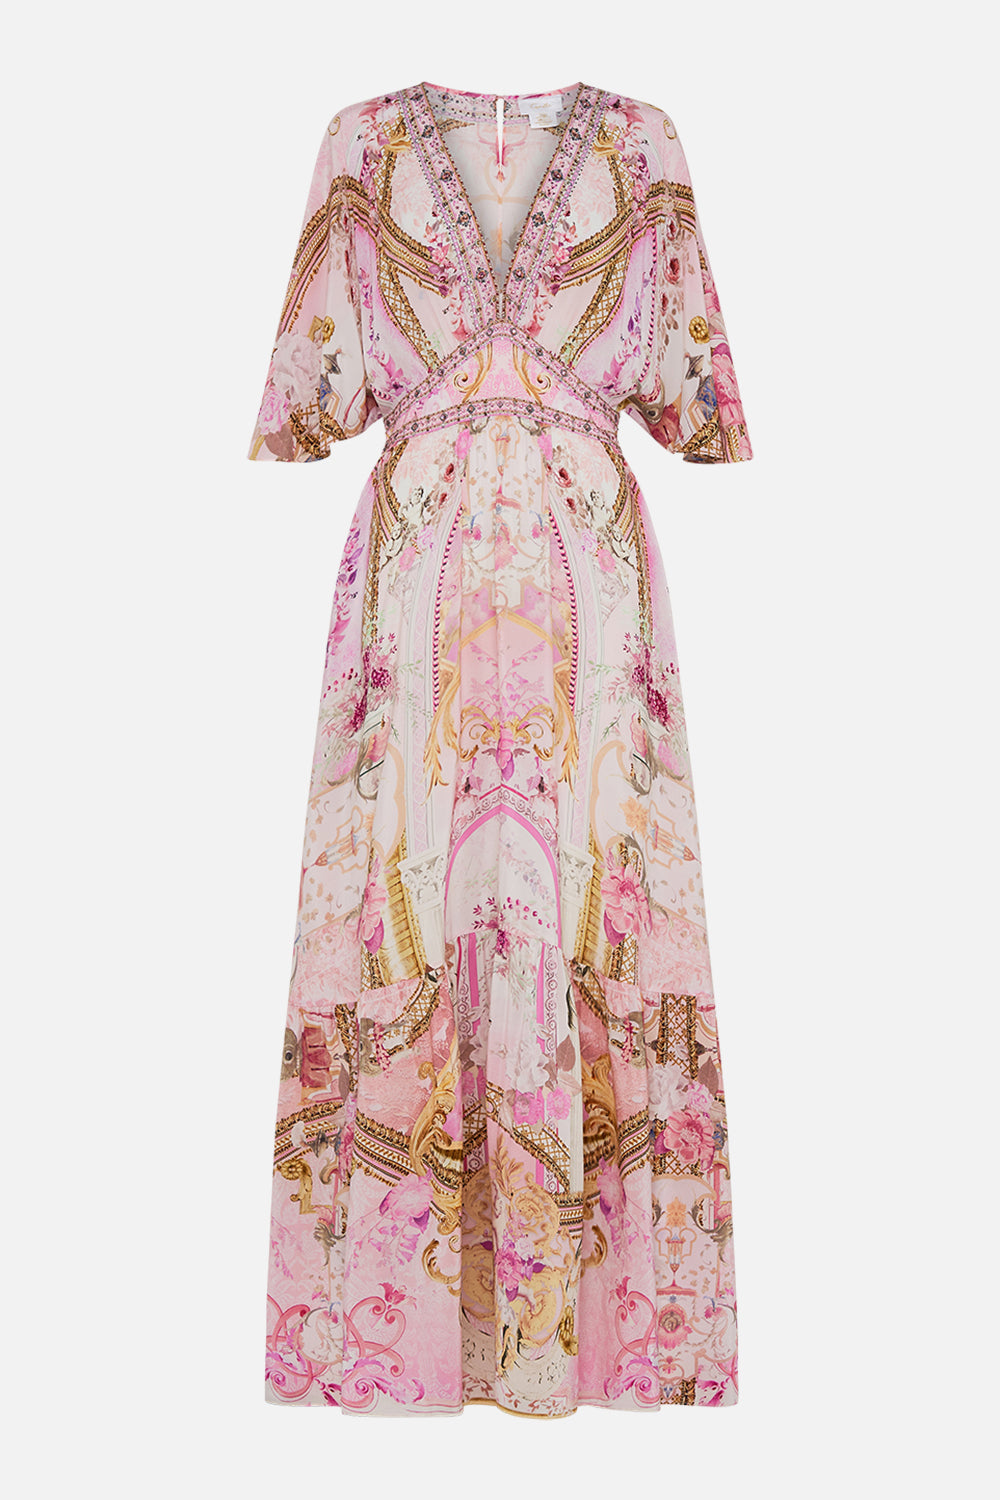 Back view of model wearing CAMILLA pink silk ruffle dress in Fresco Fairytale print